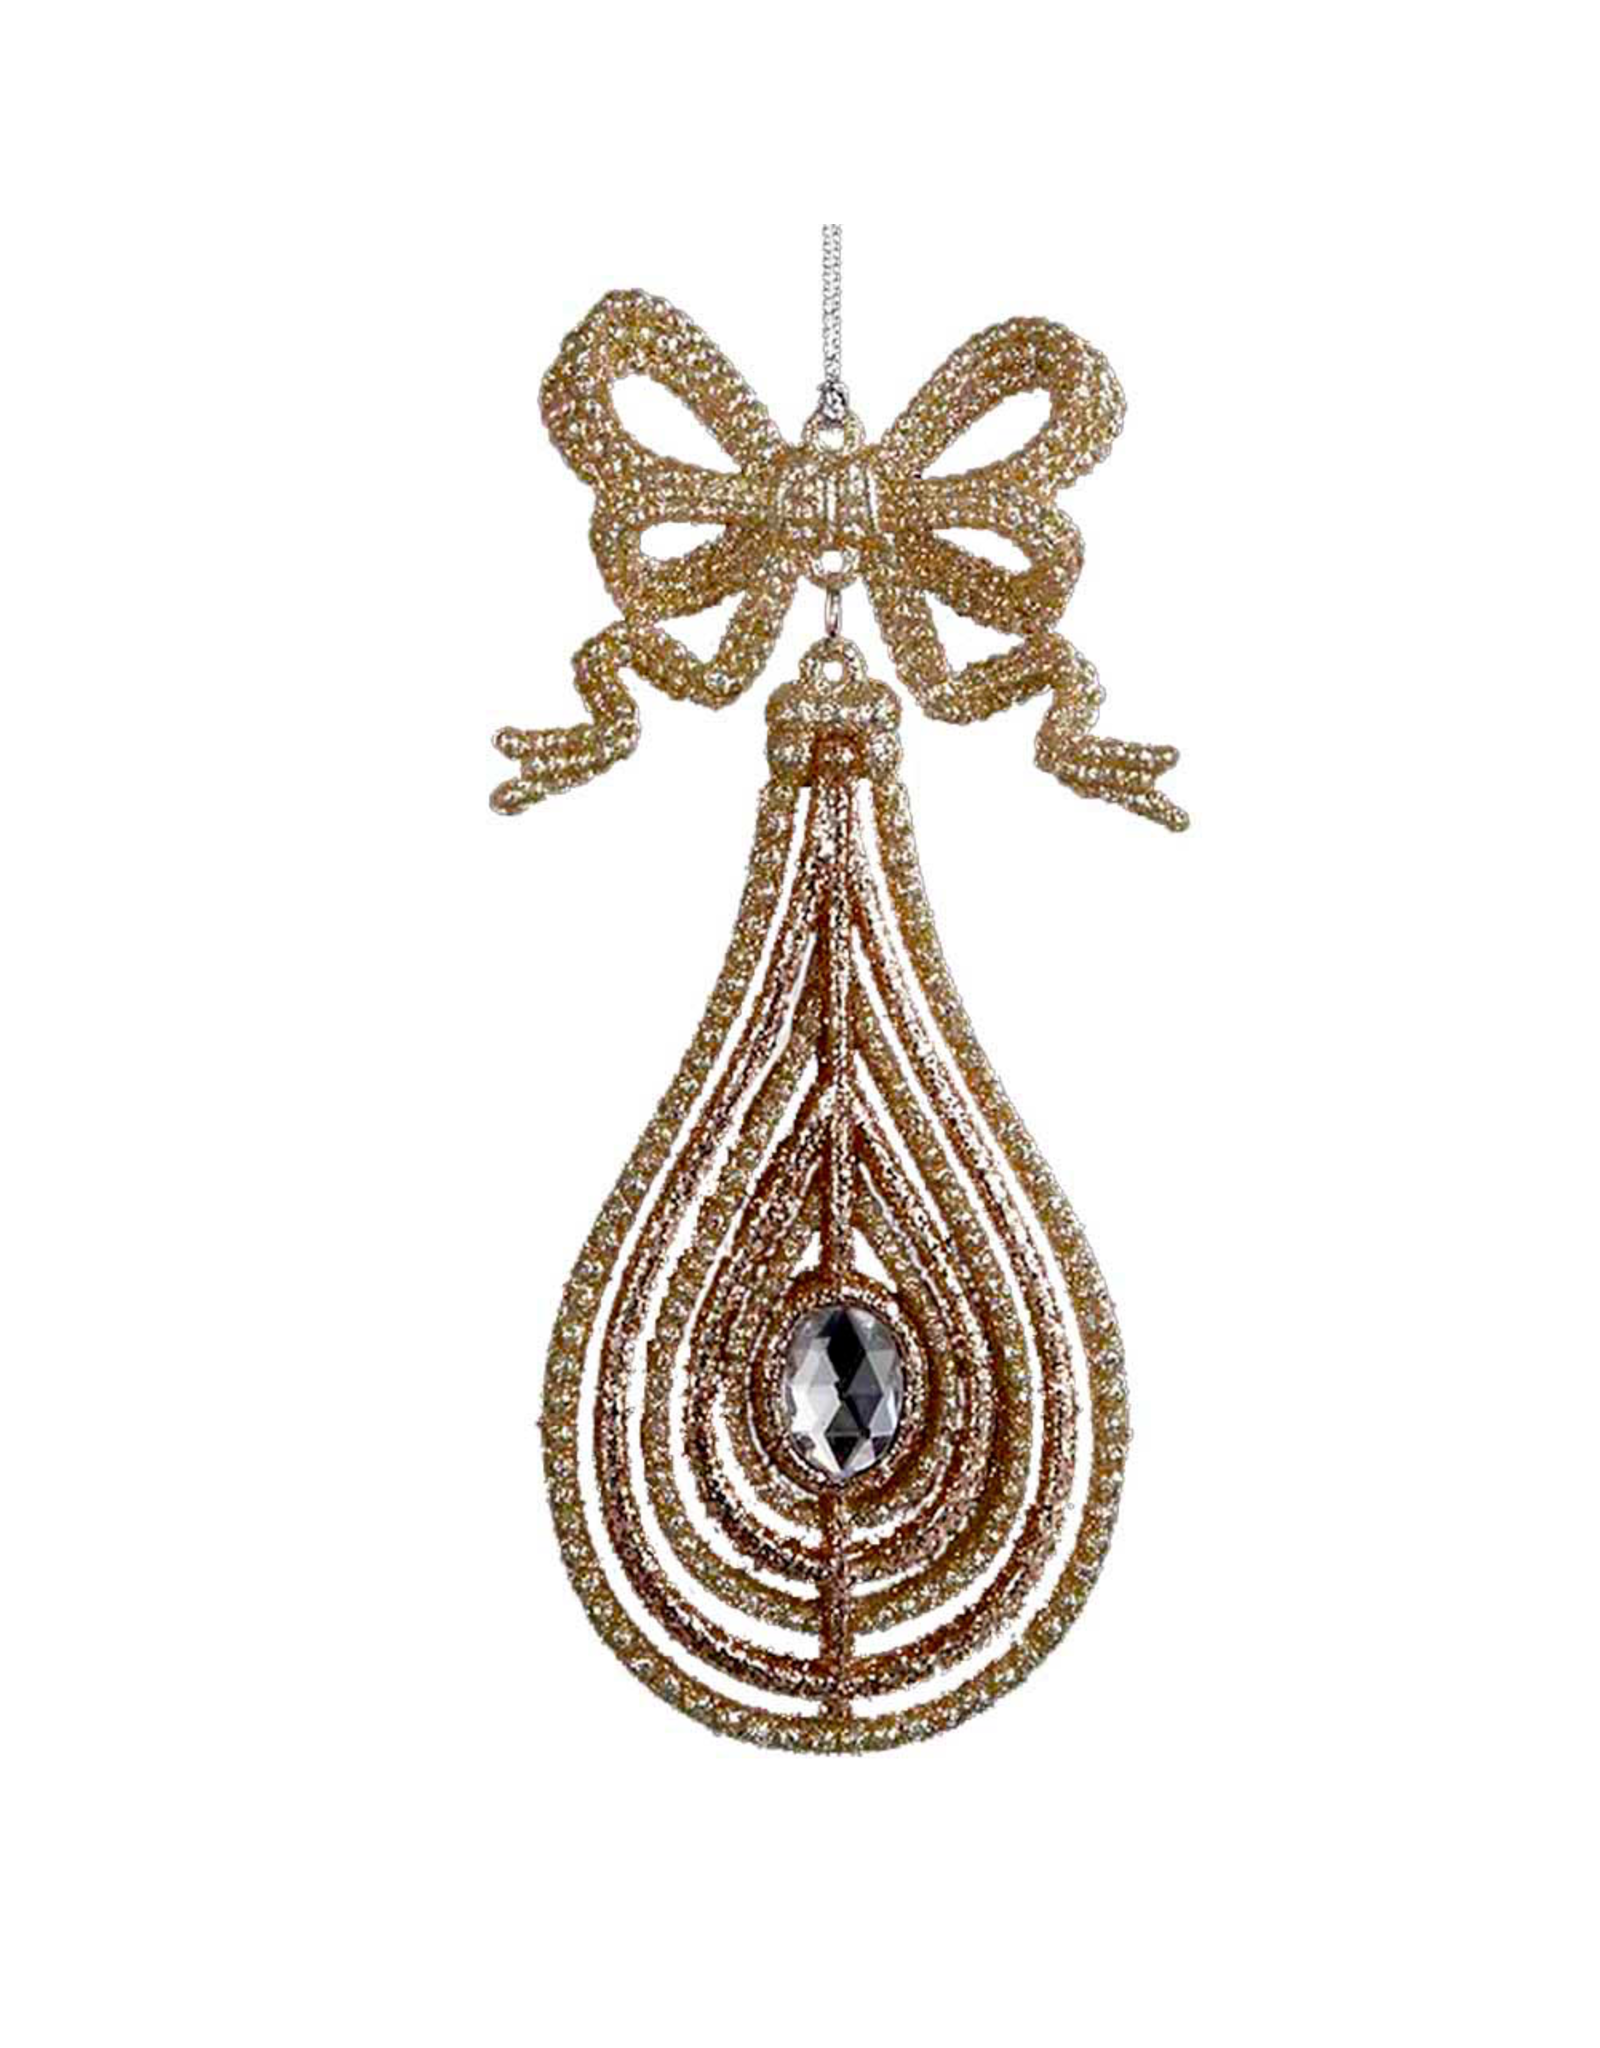 Kurt Adler Christmas Ornament Platinum Glittered Drop w Bow -B